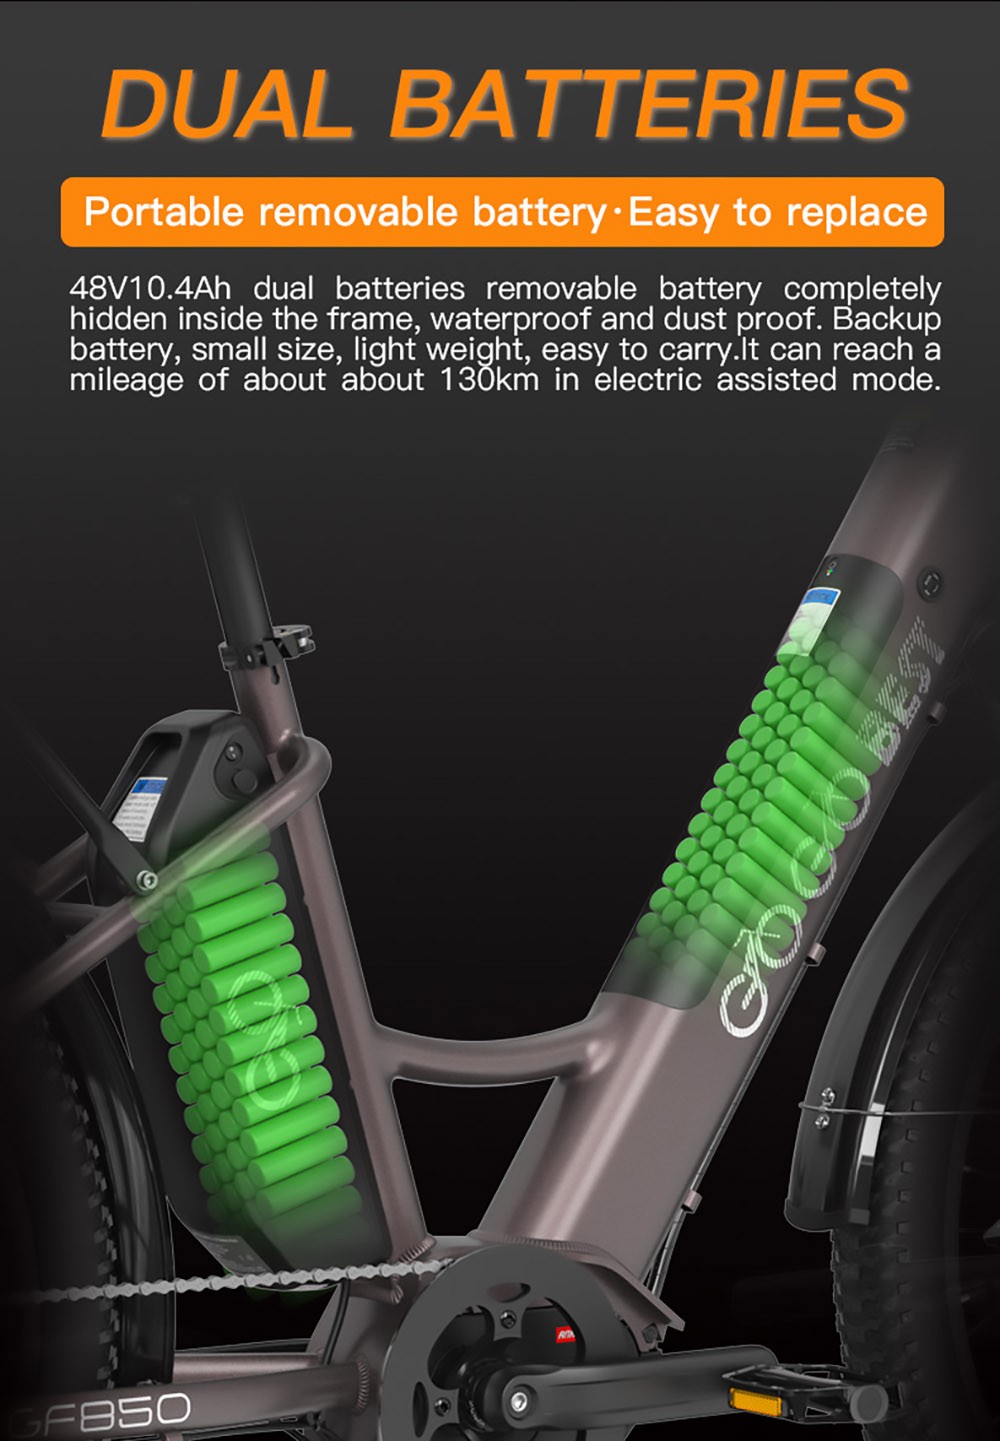 GOGOBEST GF850 elektrische fiets 500W middenmotor 32 km/u 2*10,4 Ah paars